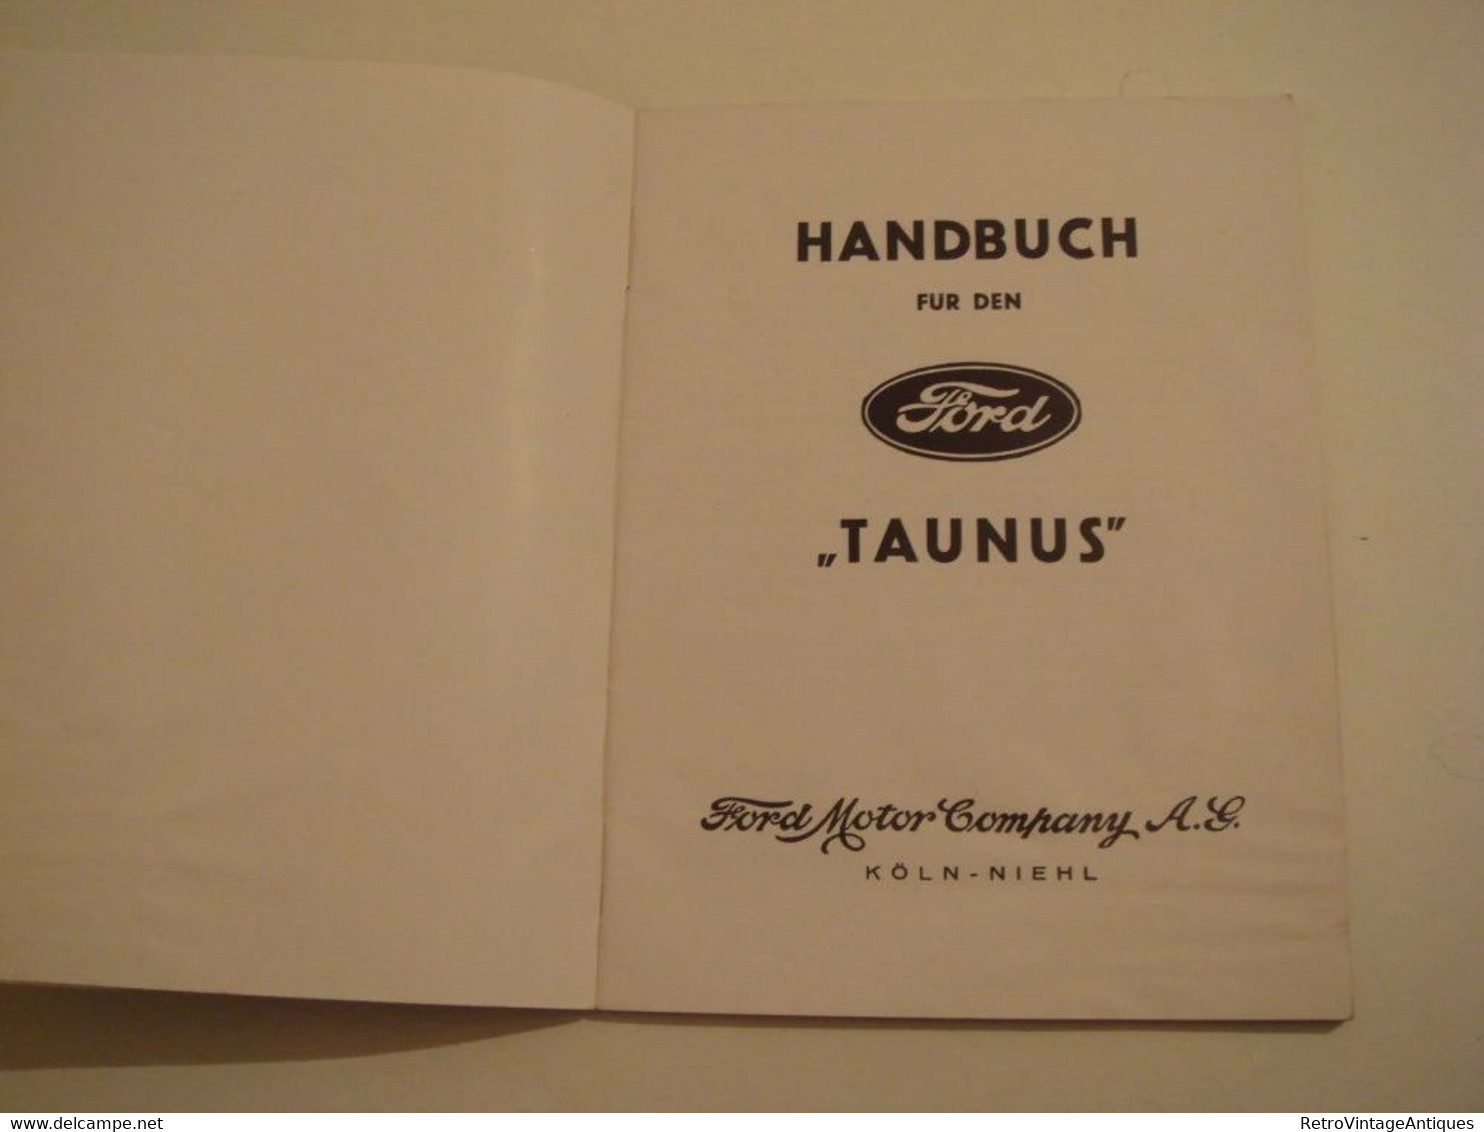 Vintage Auto Handbook Handbuch Fur Den Ford '' Taunus '' Ford Motor Company 1939 Car Manual Specifications Koln-niehl - Technical